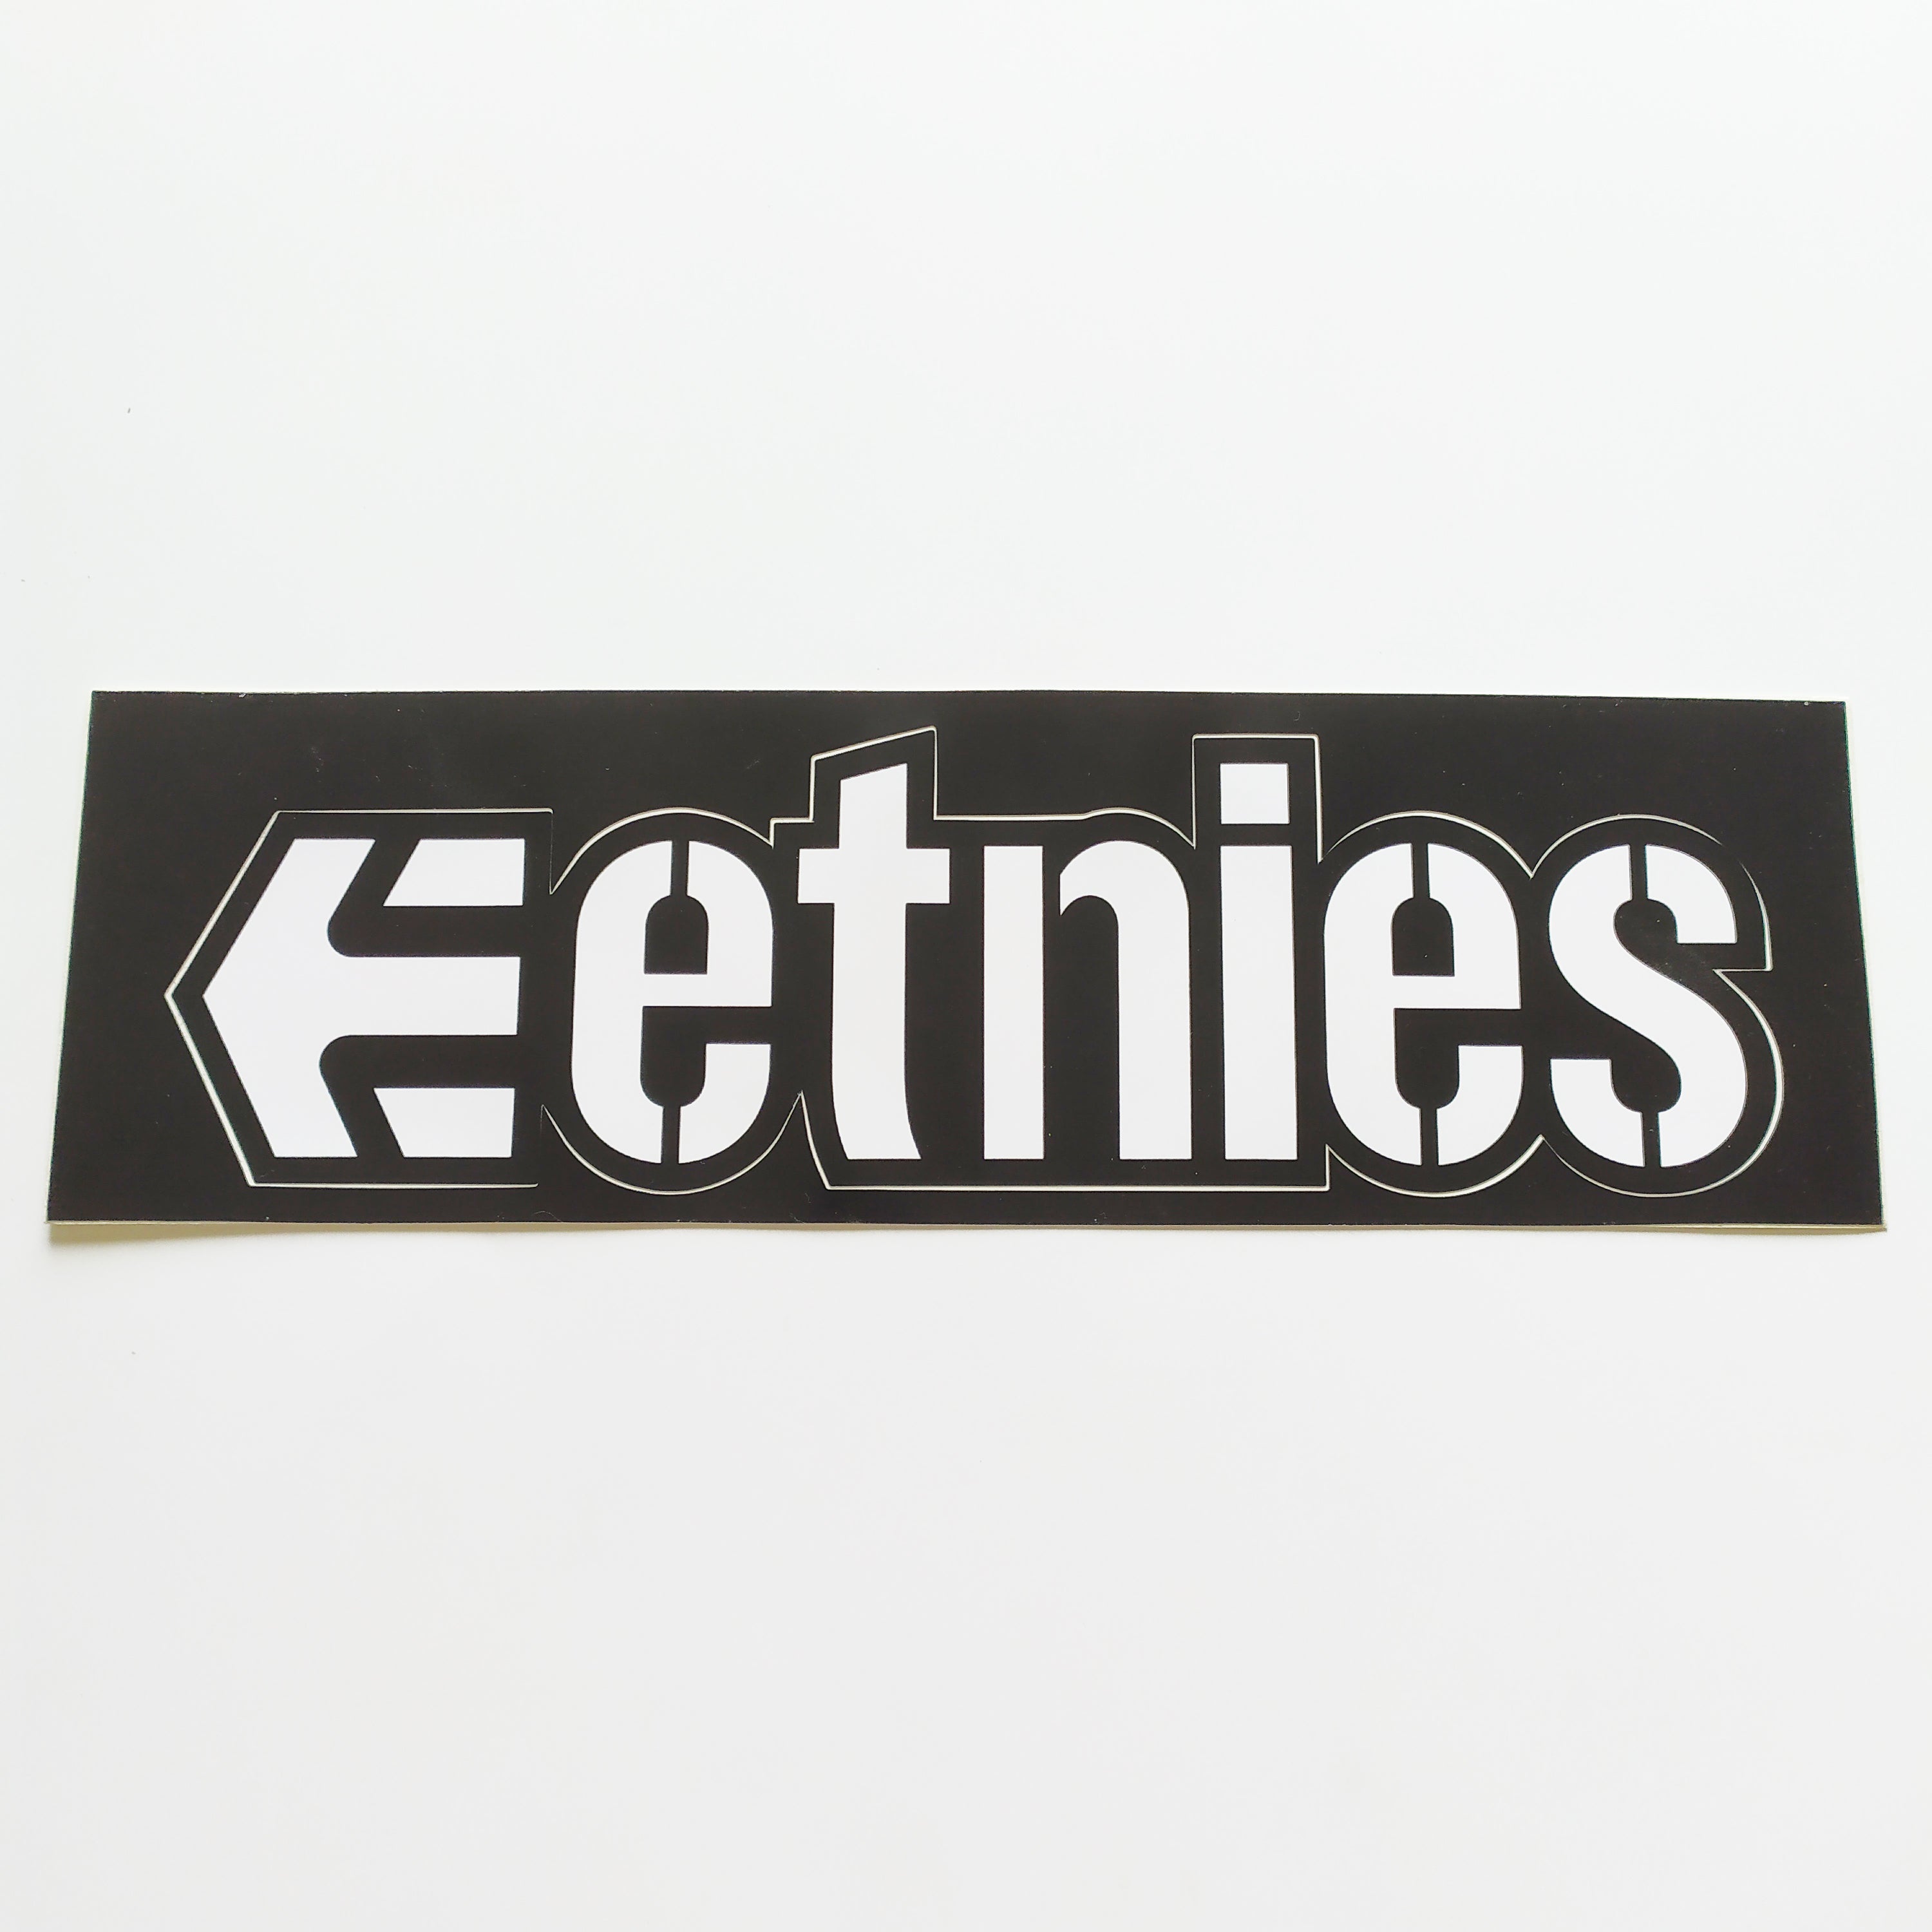 Etnies Skateboard / BMX Sticker - 27cm across approx - SkateboardStickers.com